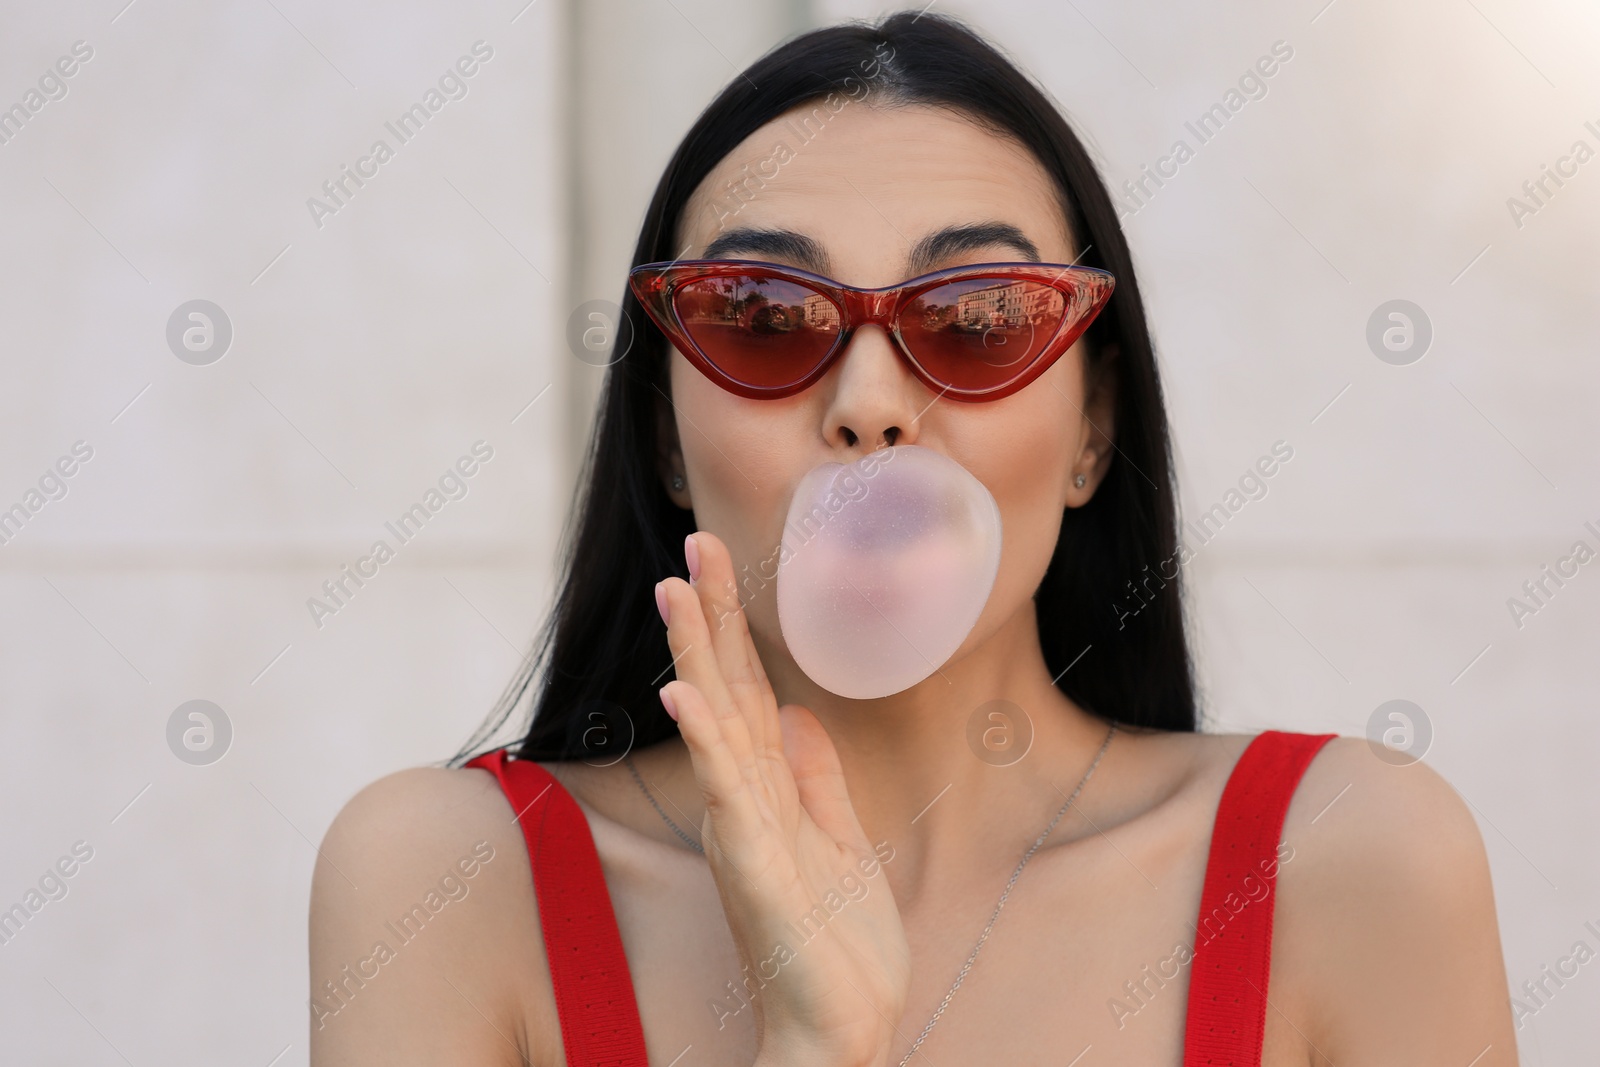 Photo of Beautiful woman in stylish sunglasses blowing gum near wall outdoors